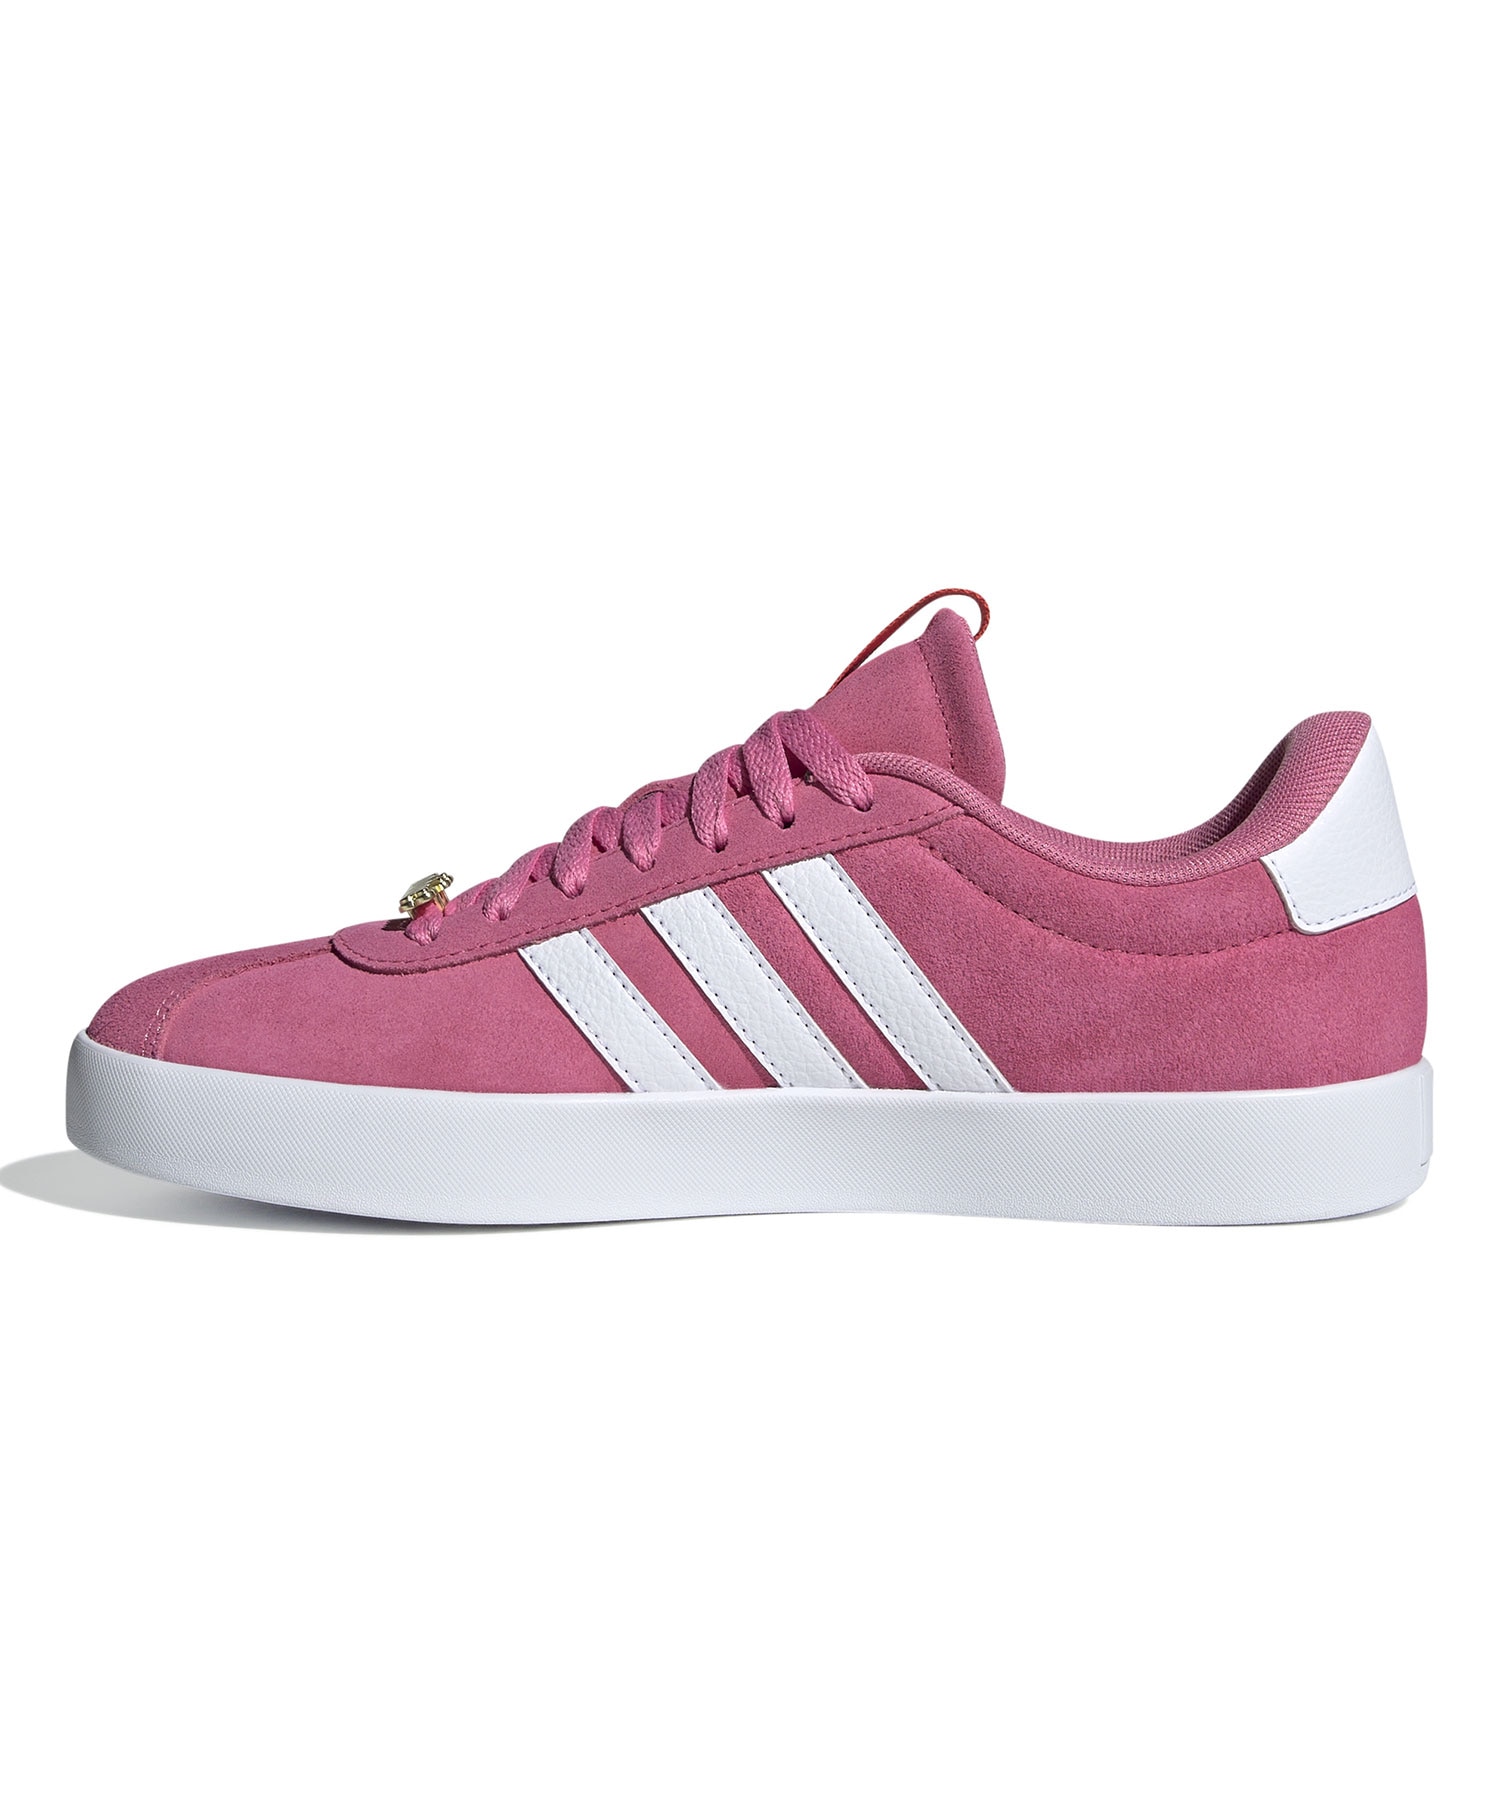 Adidas VL Court 3.0 Damesneakers